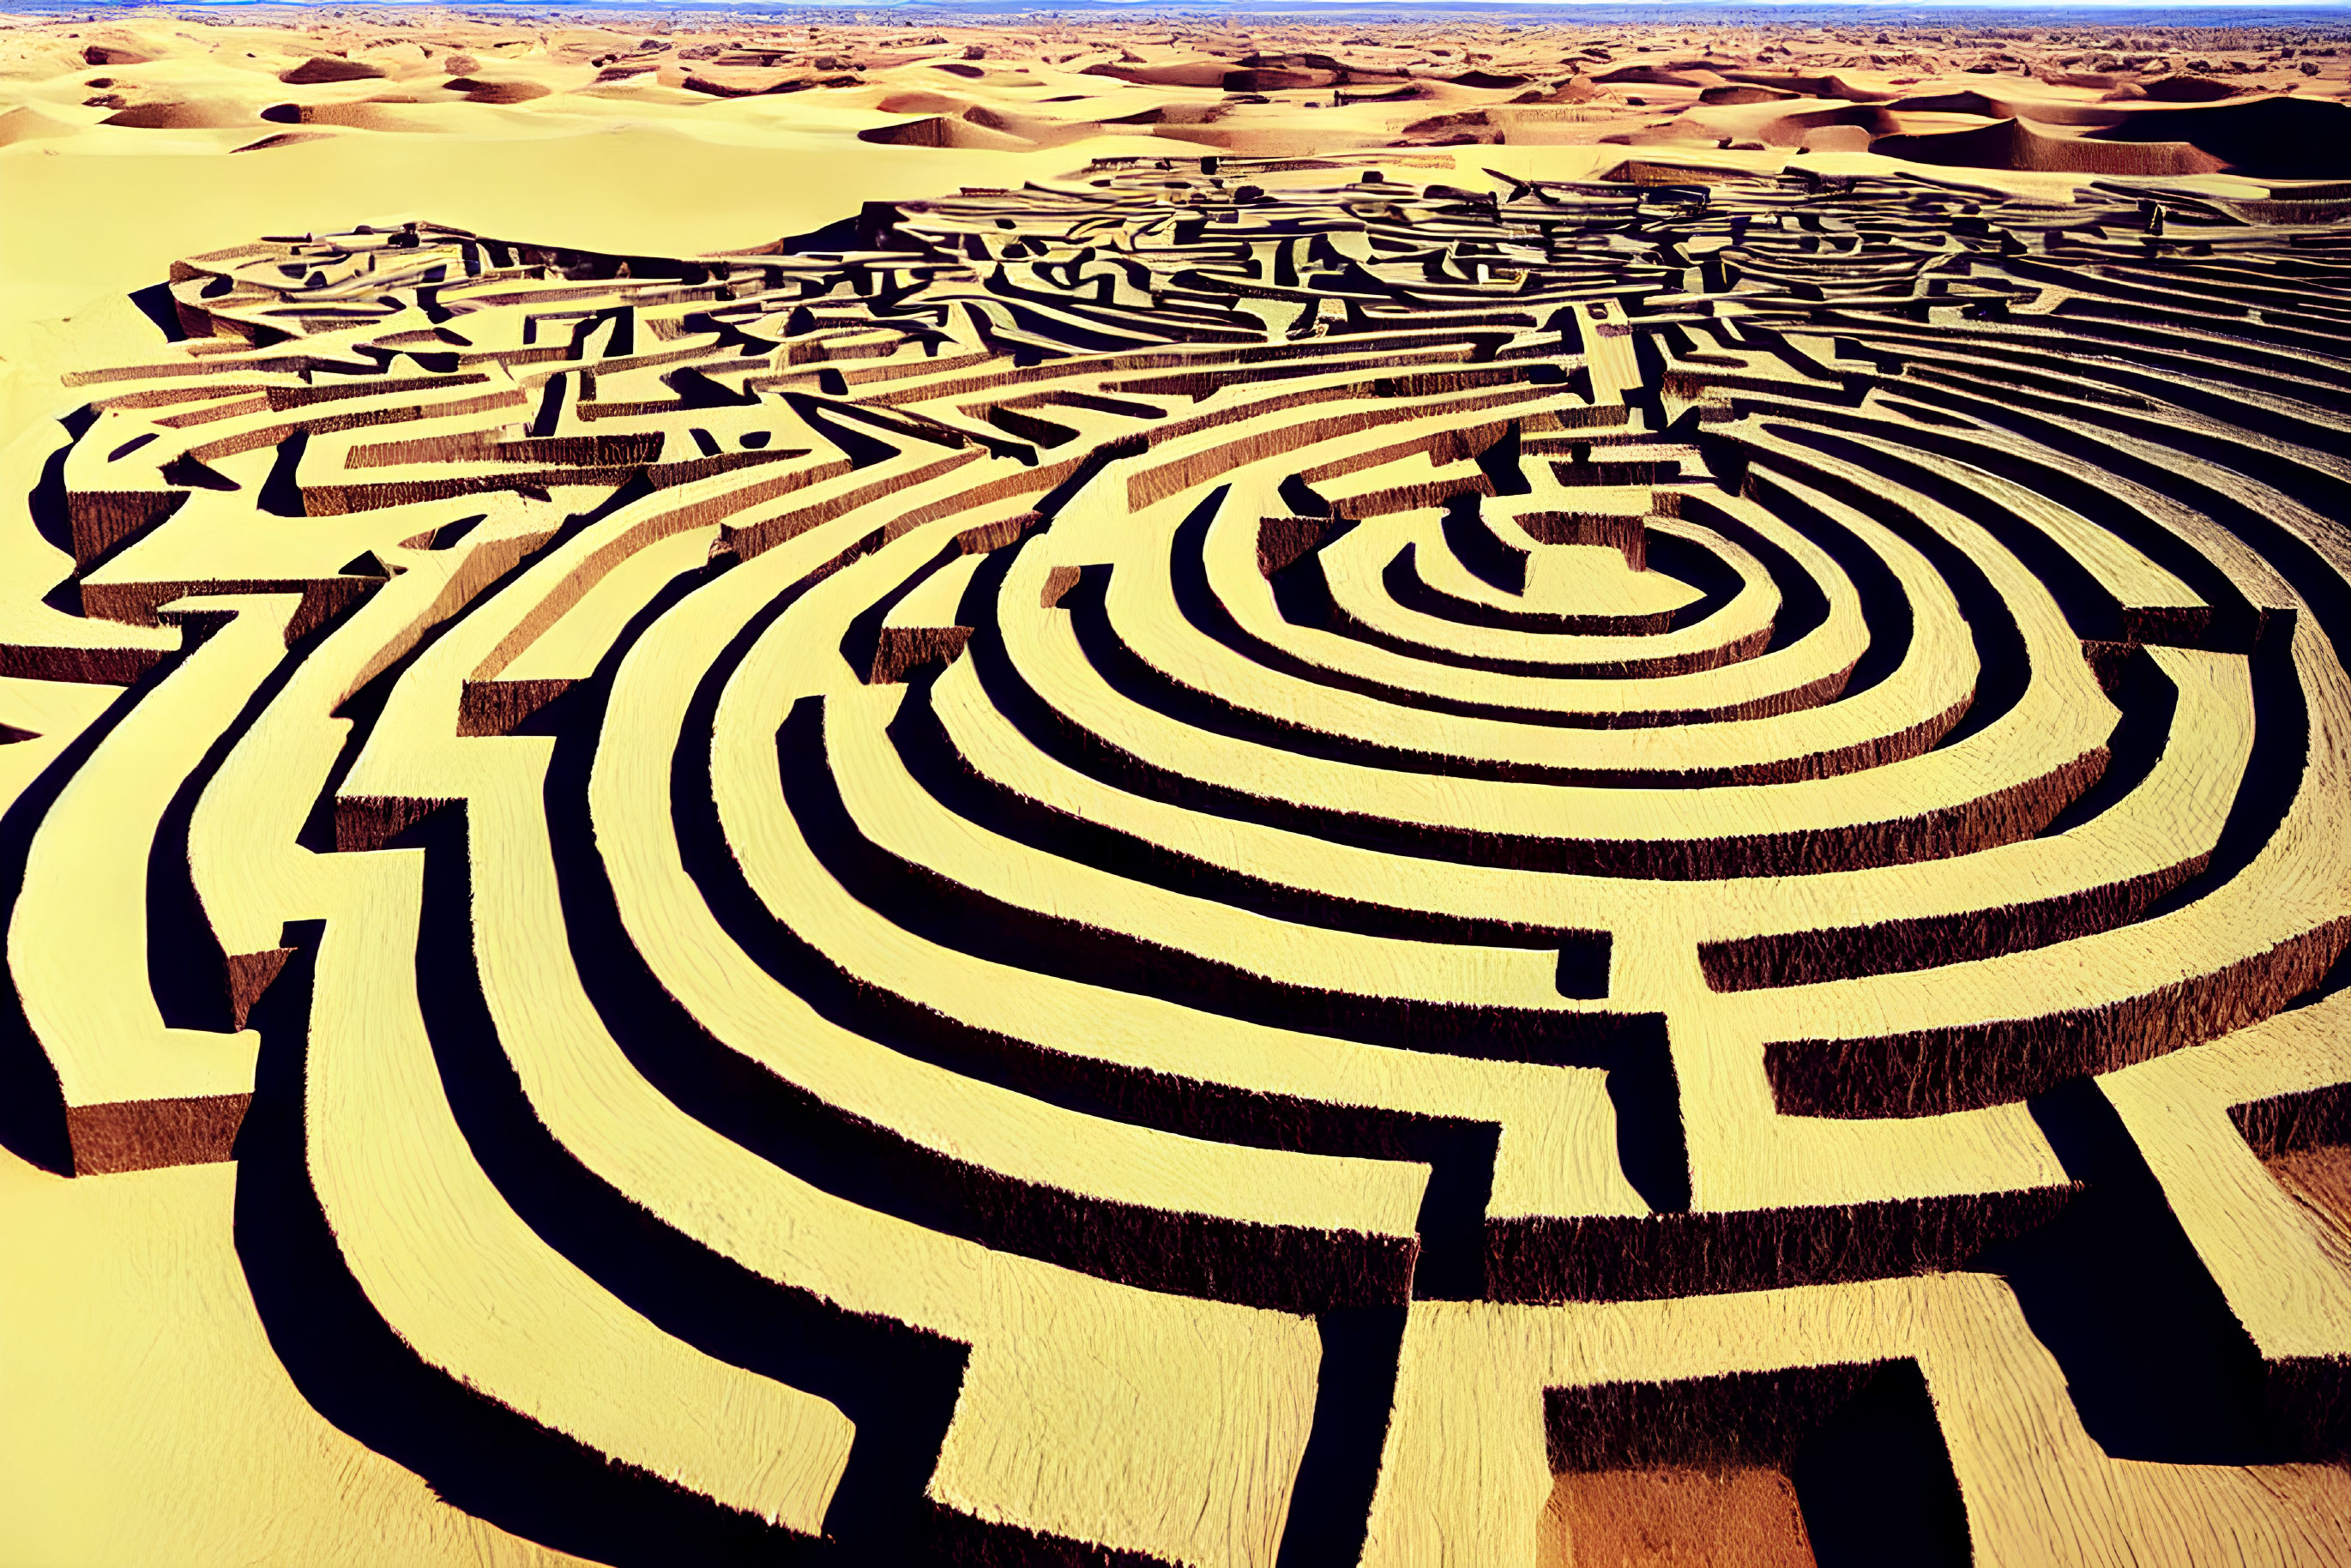 Geometric labyrinth pattern in vast desert landscape